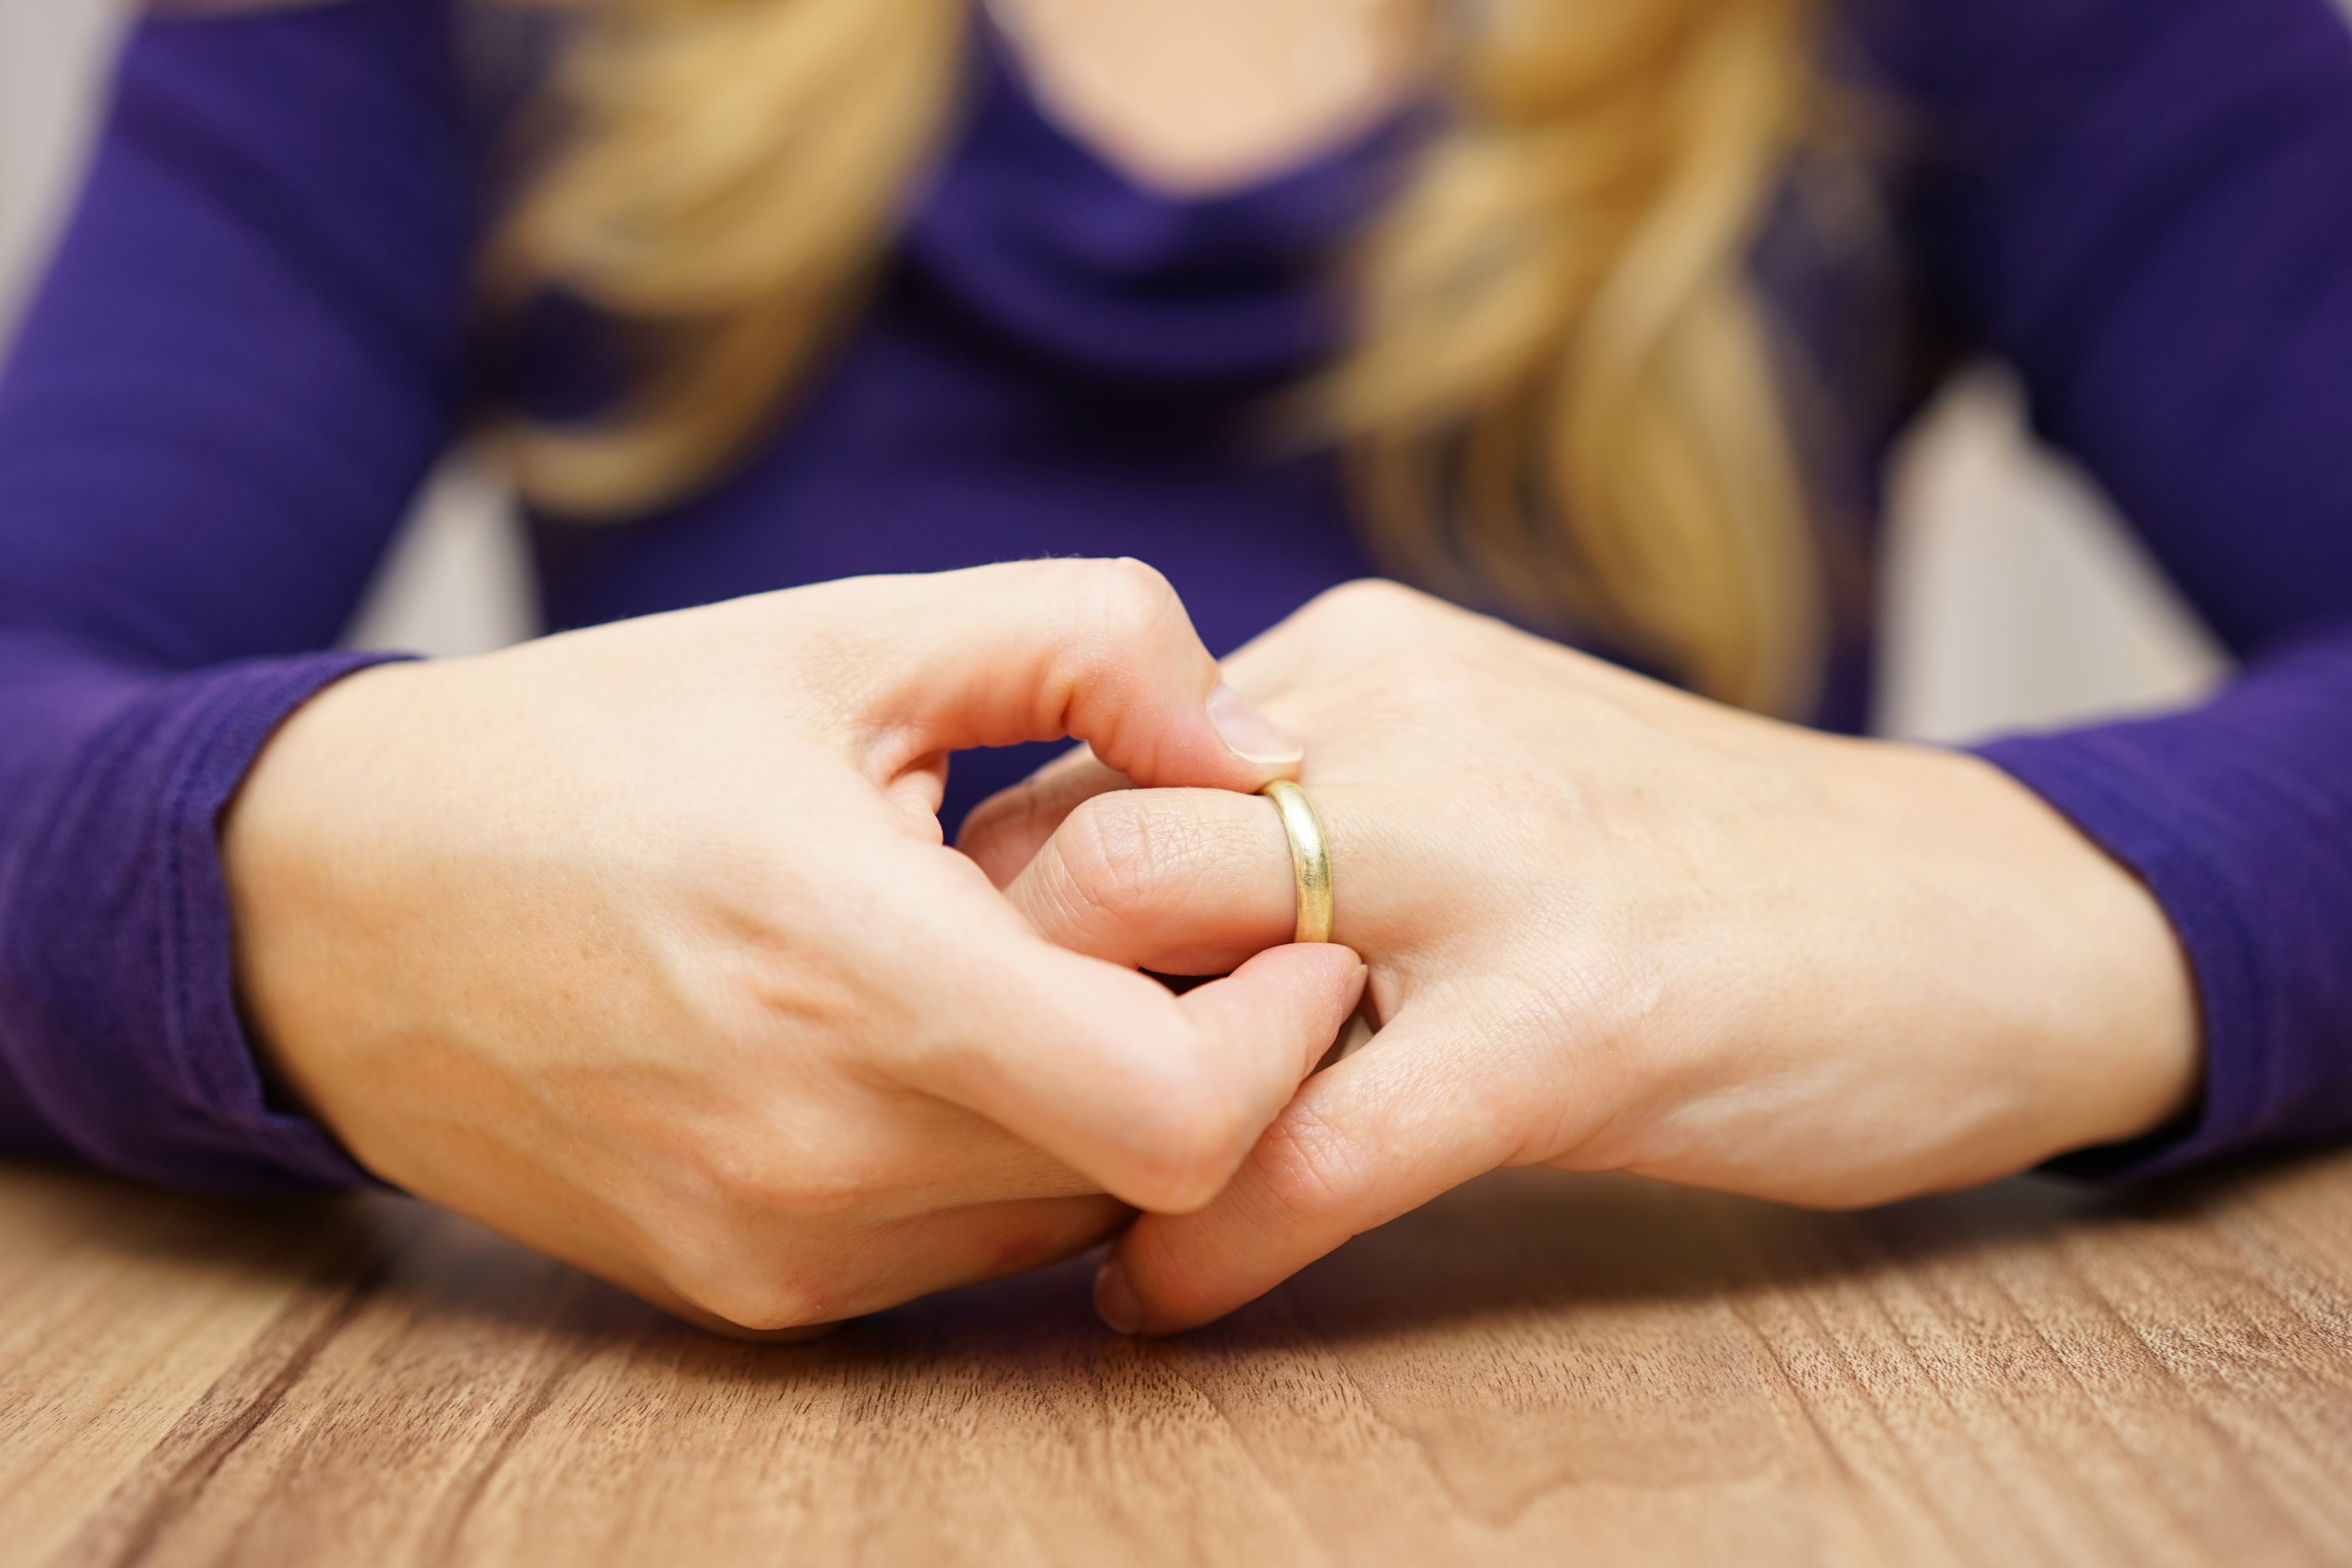 Une femme touchant son alliance | Source : Shutterstock